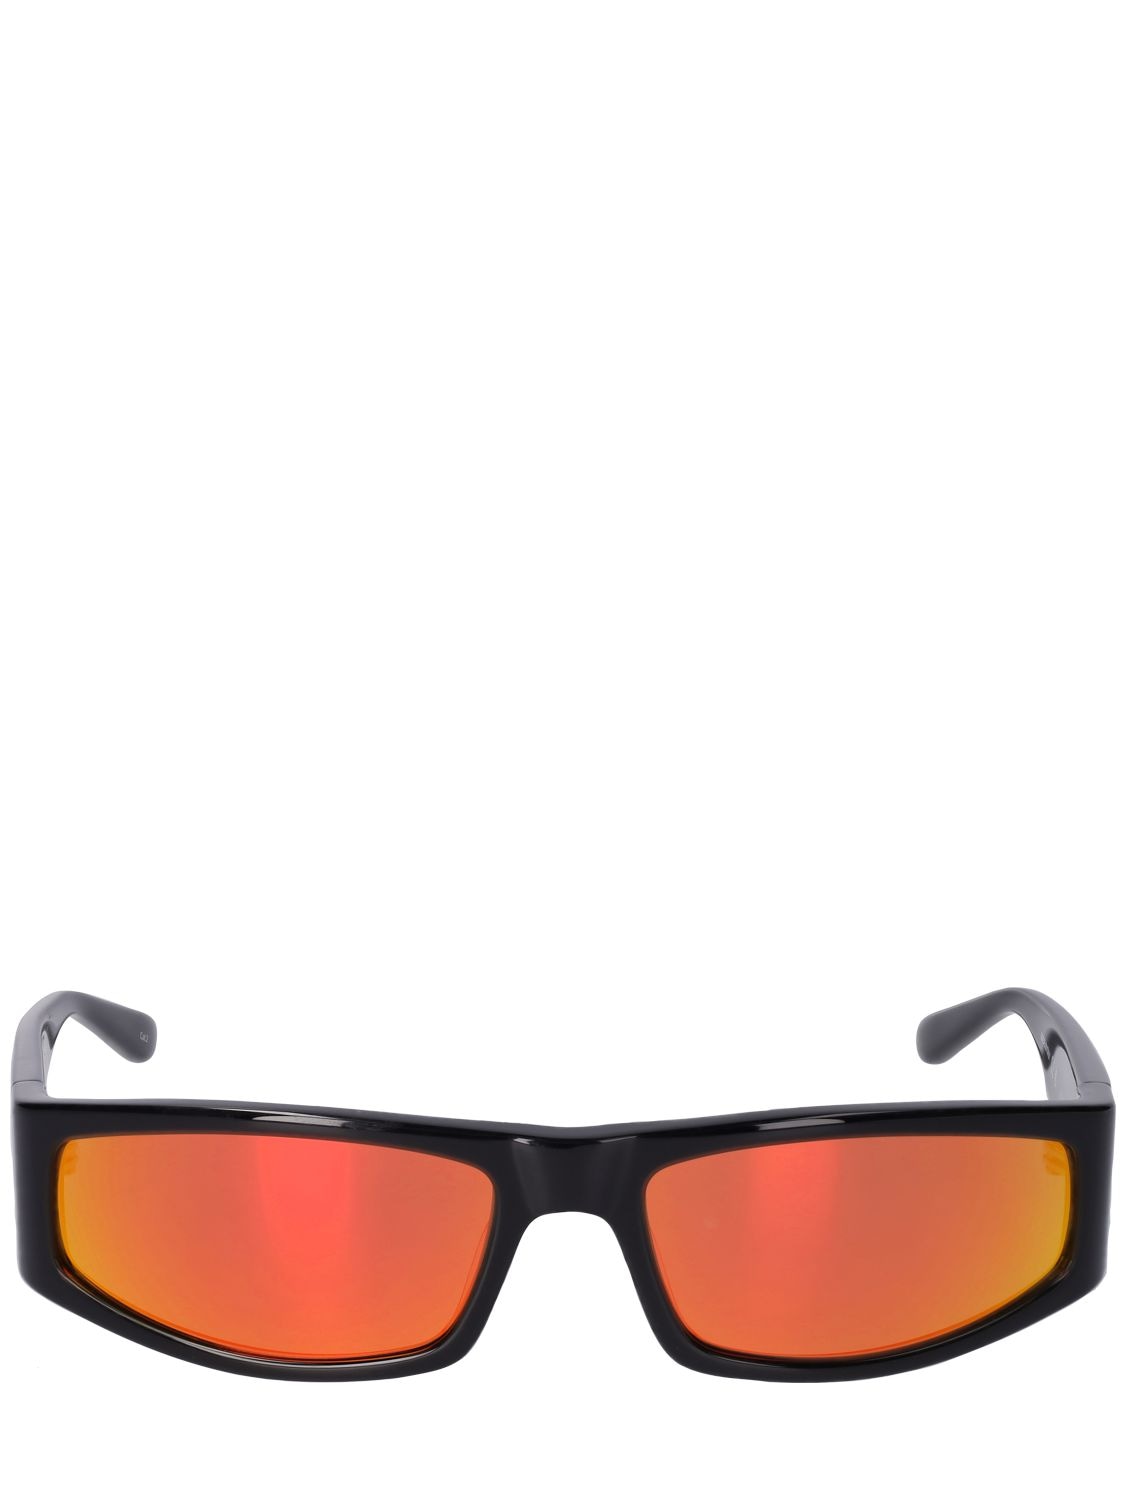 Image of Sunset Tech Sunglasses